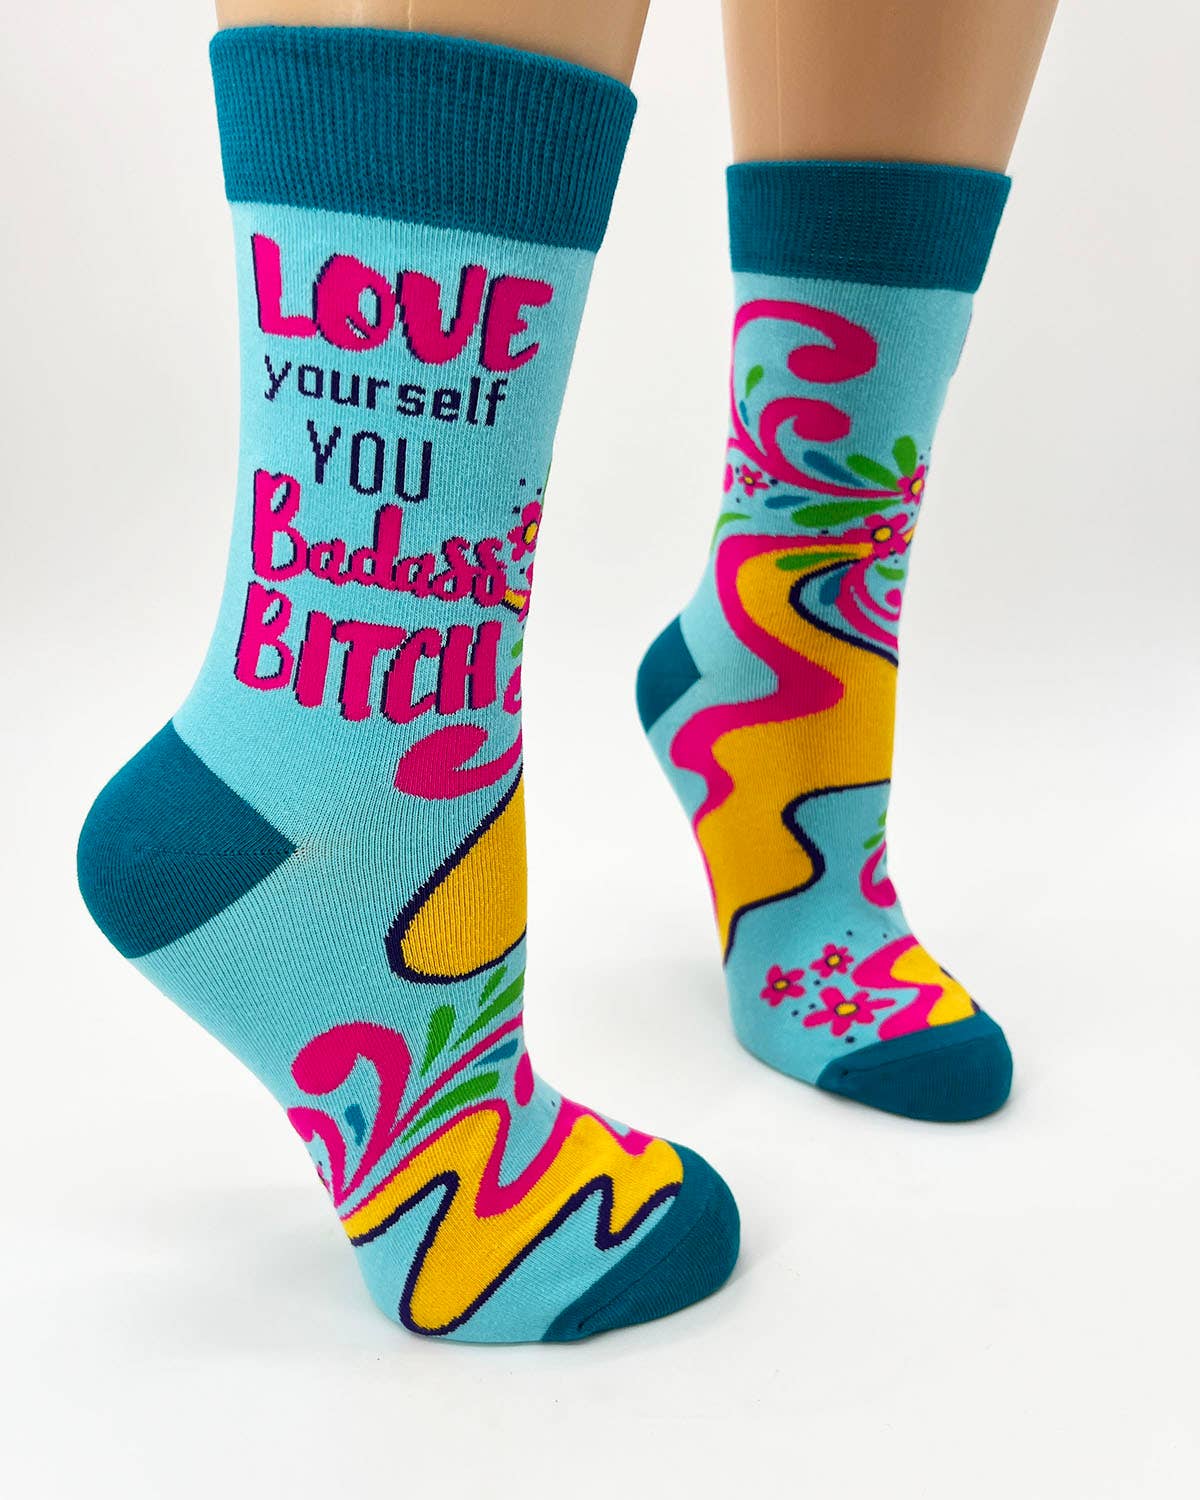 Love Yourself You Badass Bitch Women's Crew Socks